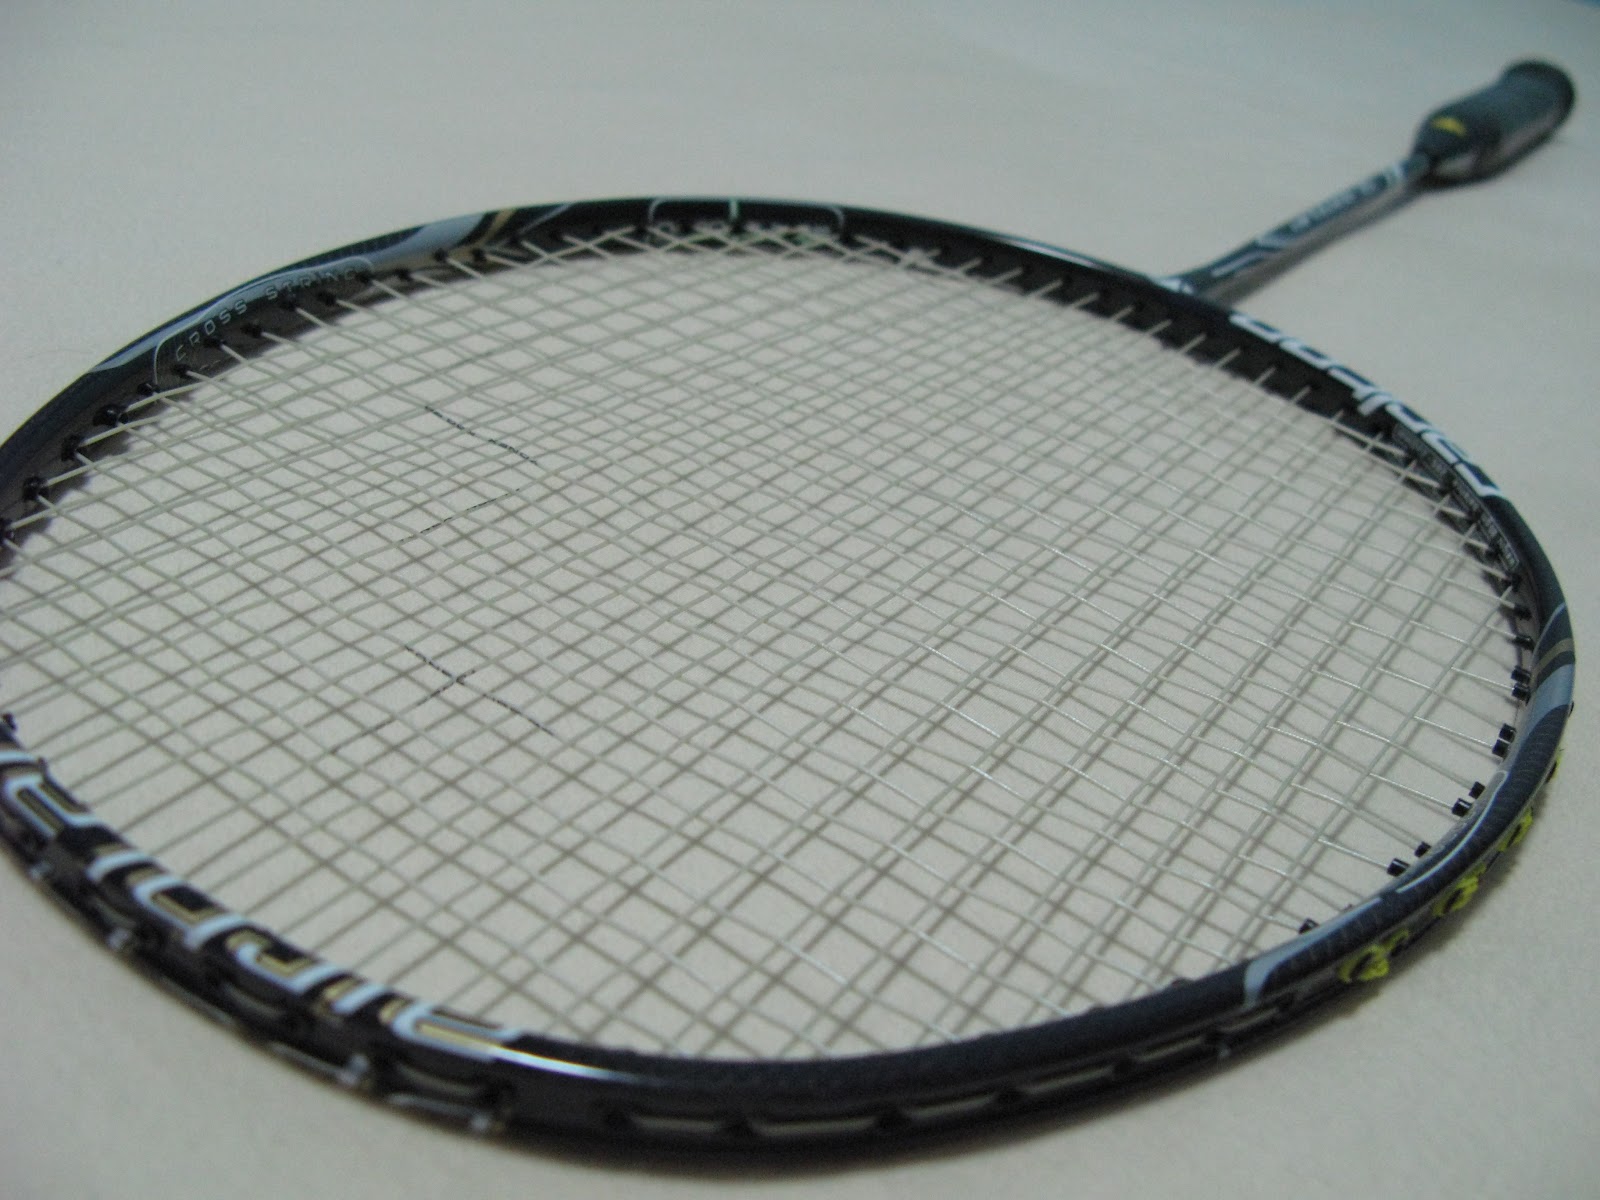 Of badminton things Badminton Racket Review Carlton Airblade 35